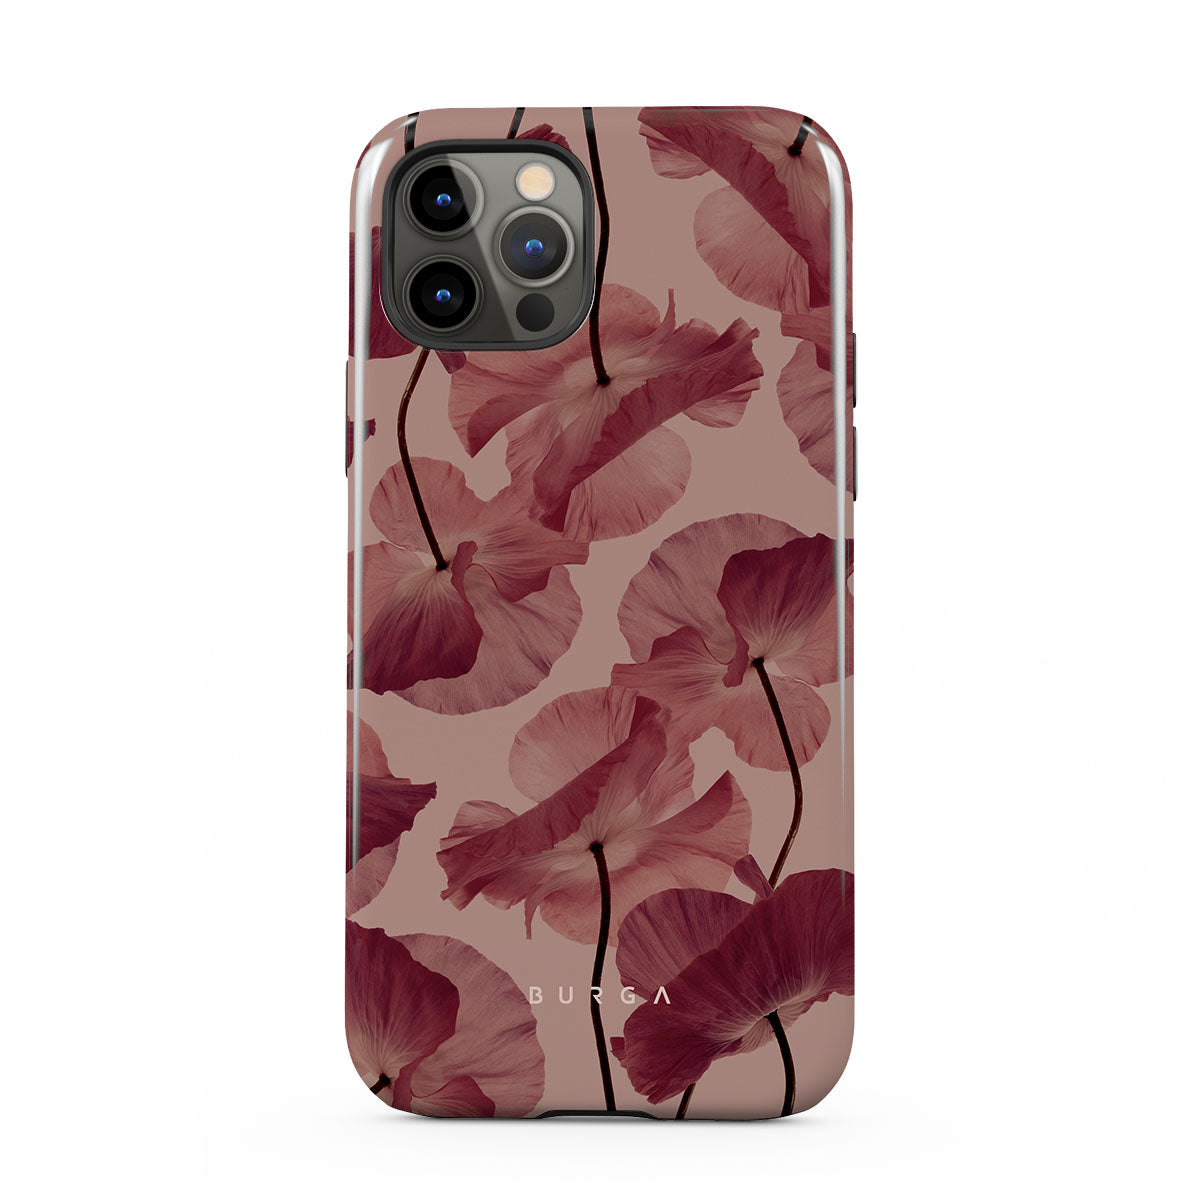 iPhone 12 Pro Max Cases | Stylish & Protective - BURGA